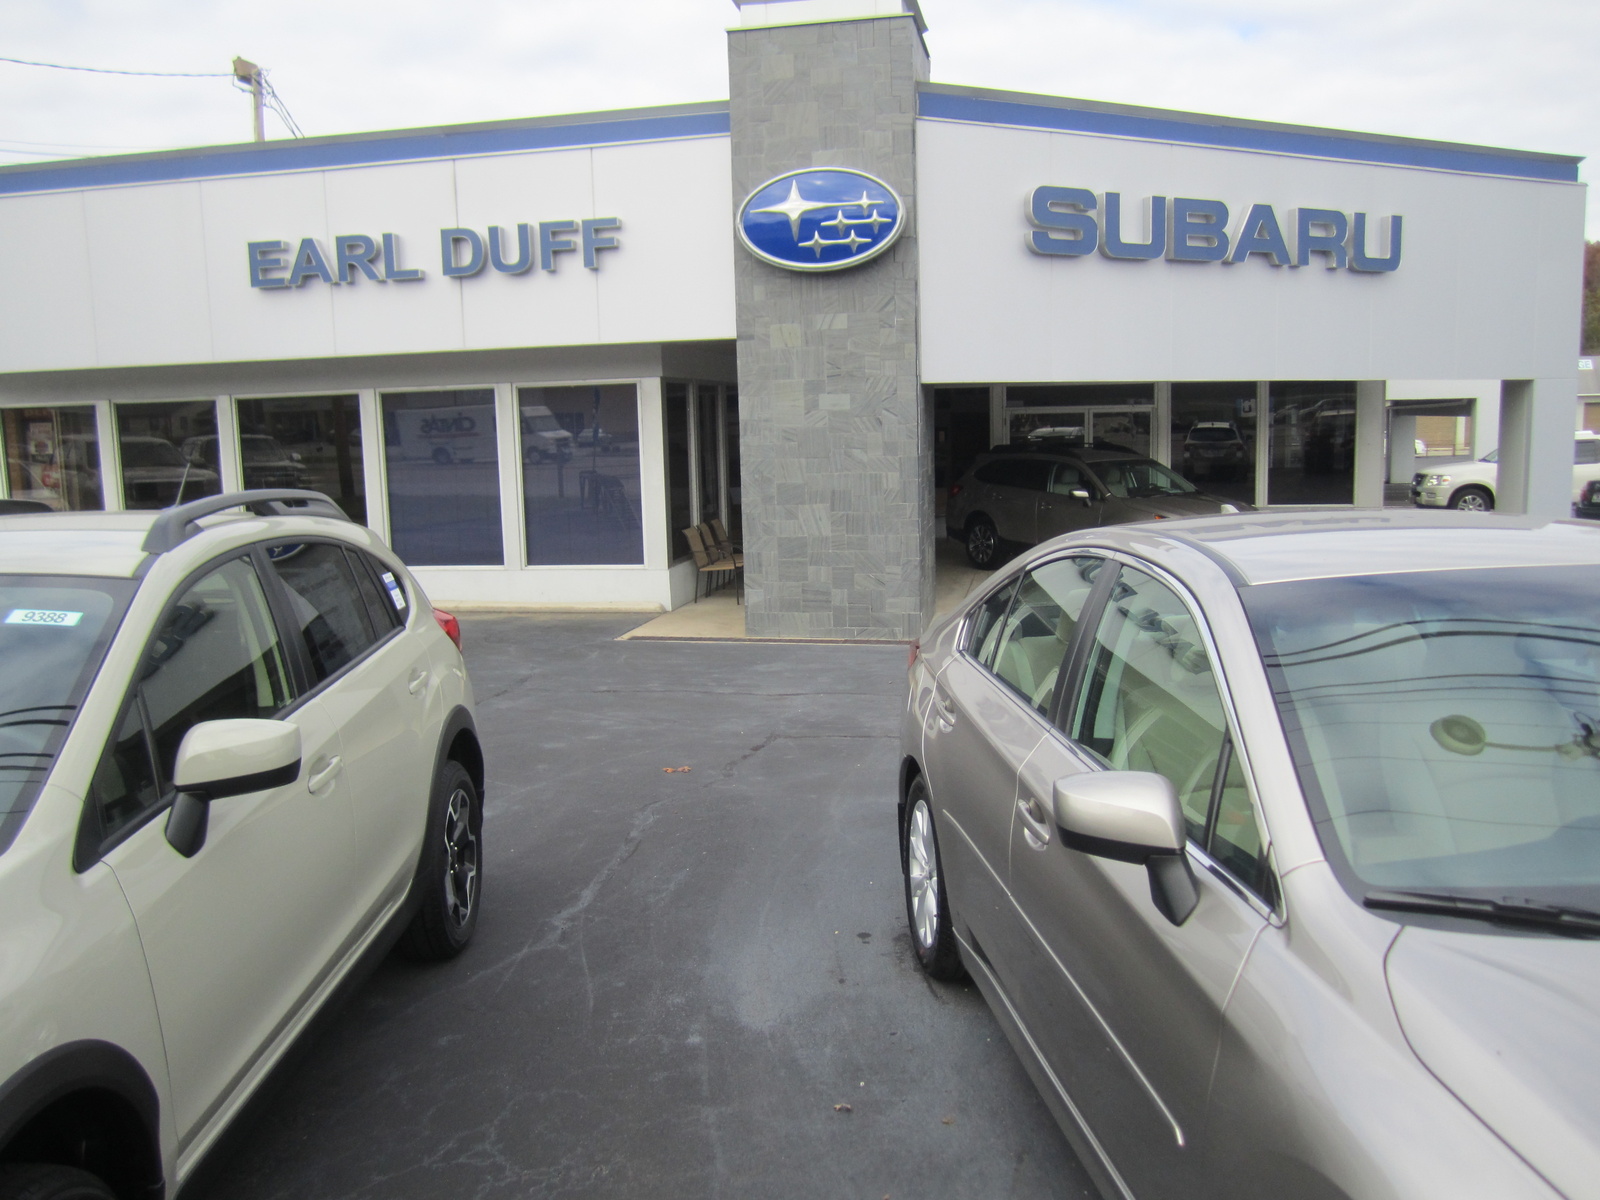 Earl Duff Subaru - Harriman, TN: Read Consumer reviews, Browse Used and